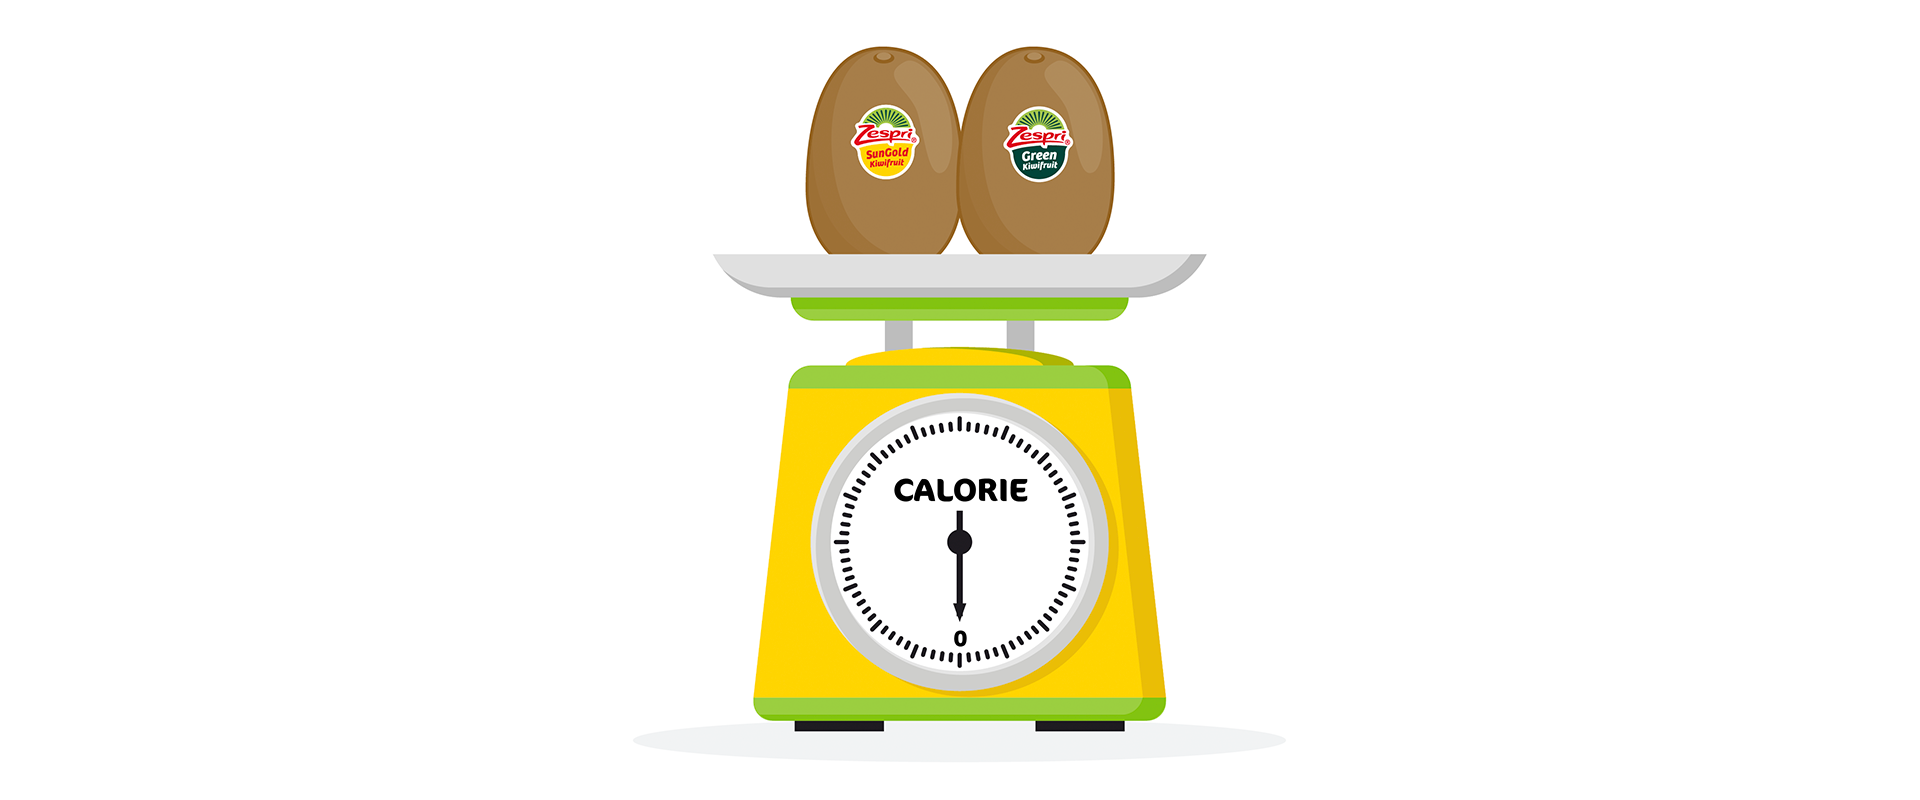 Quante calorie contiene un kiwi?